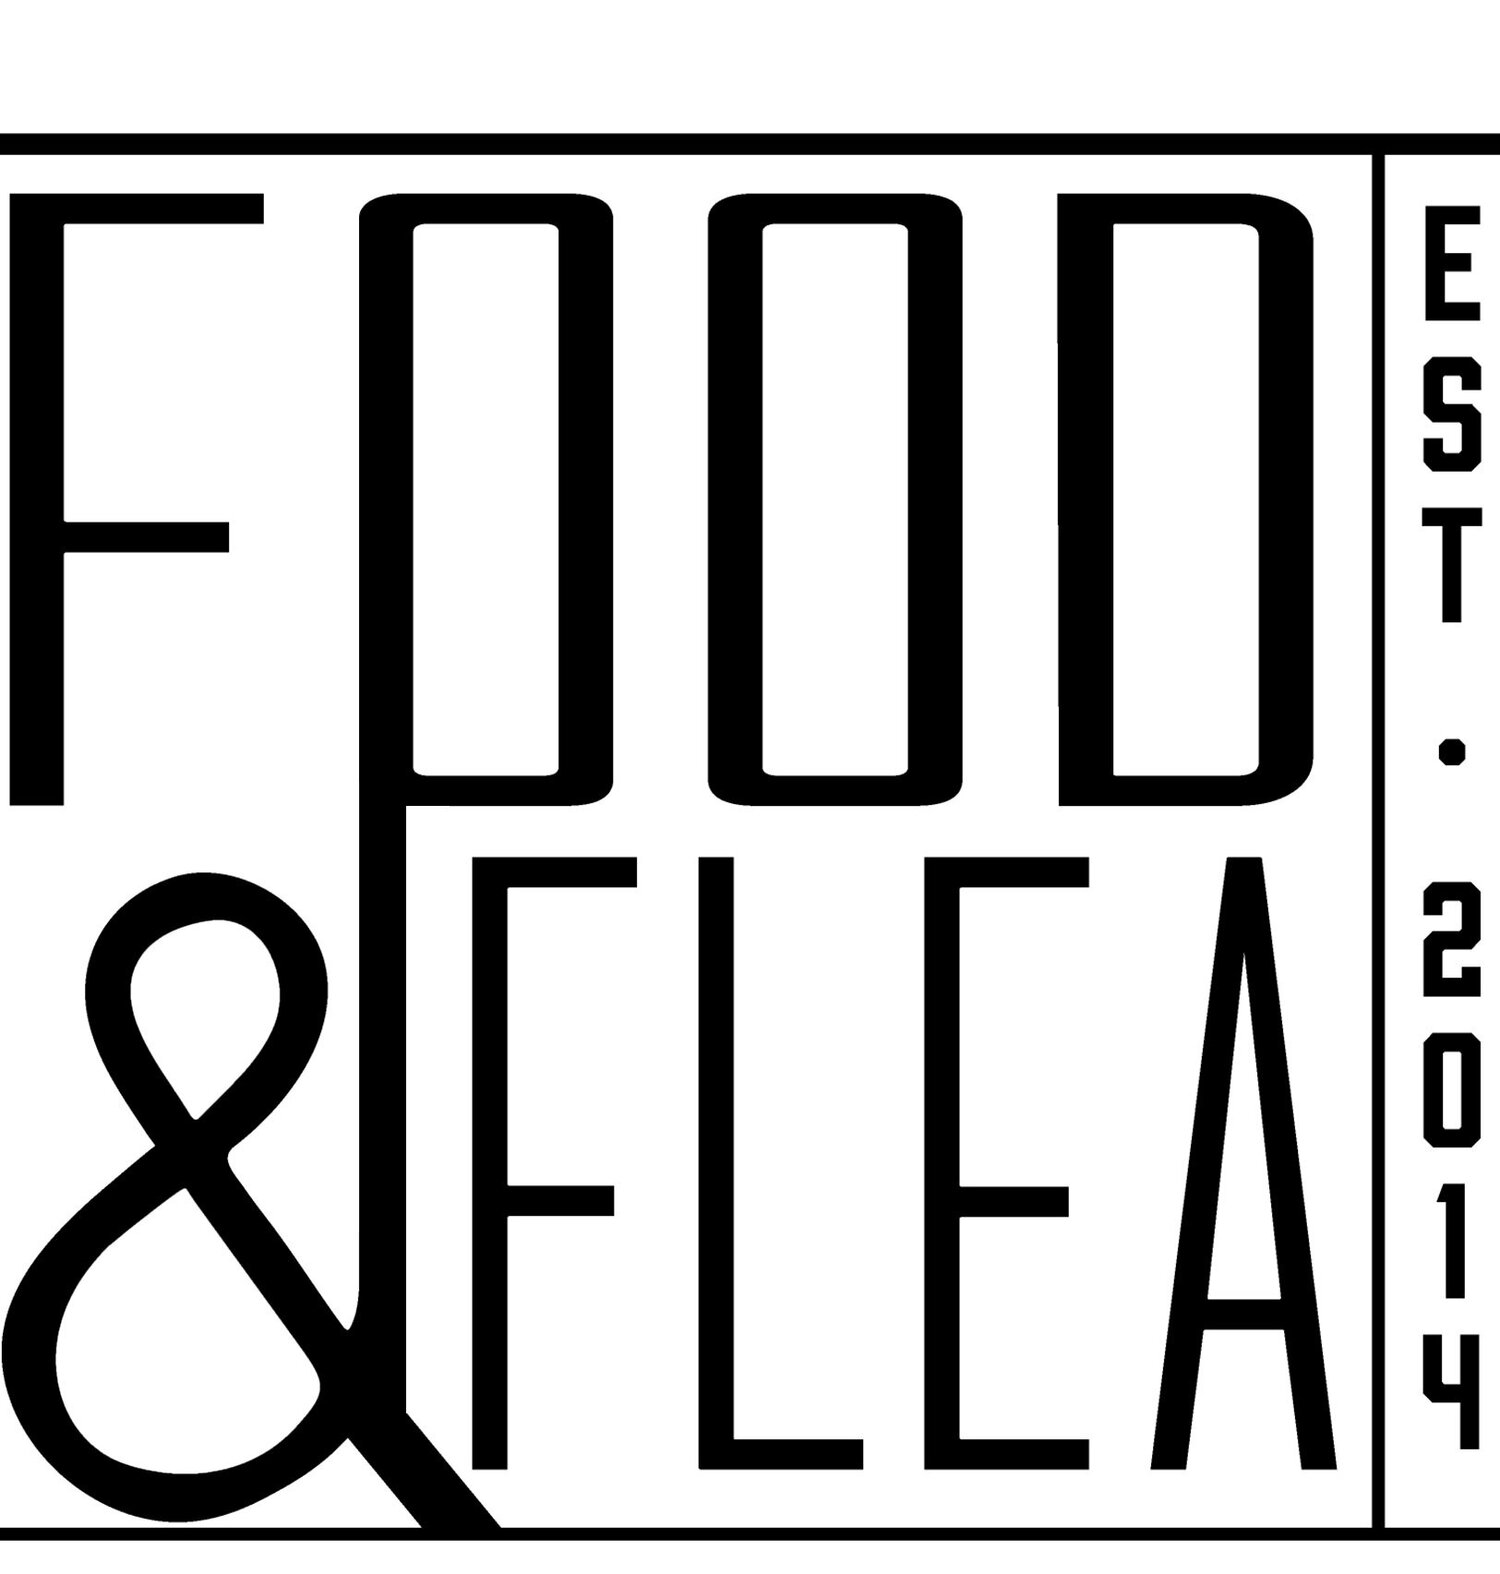 2019 Cary Food and Flea Market